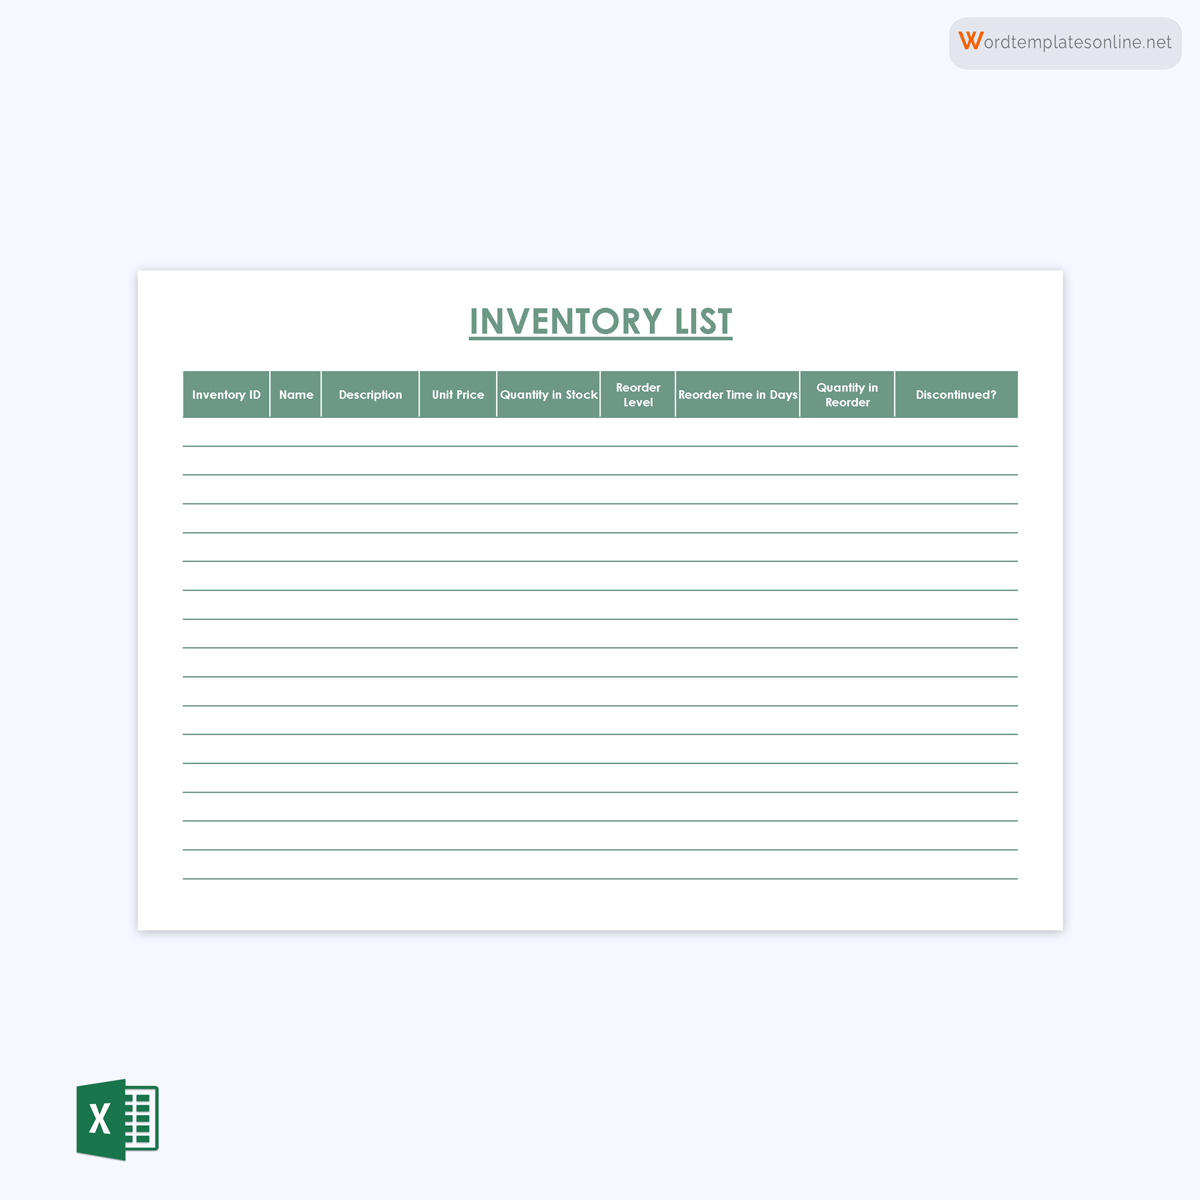 Inventory list spreadsheet template - Free sample